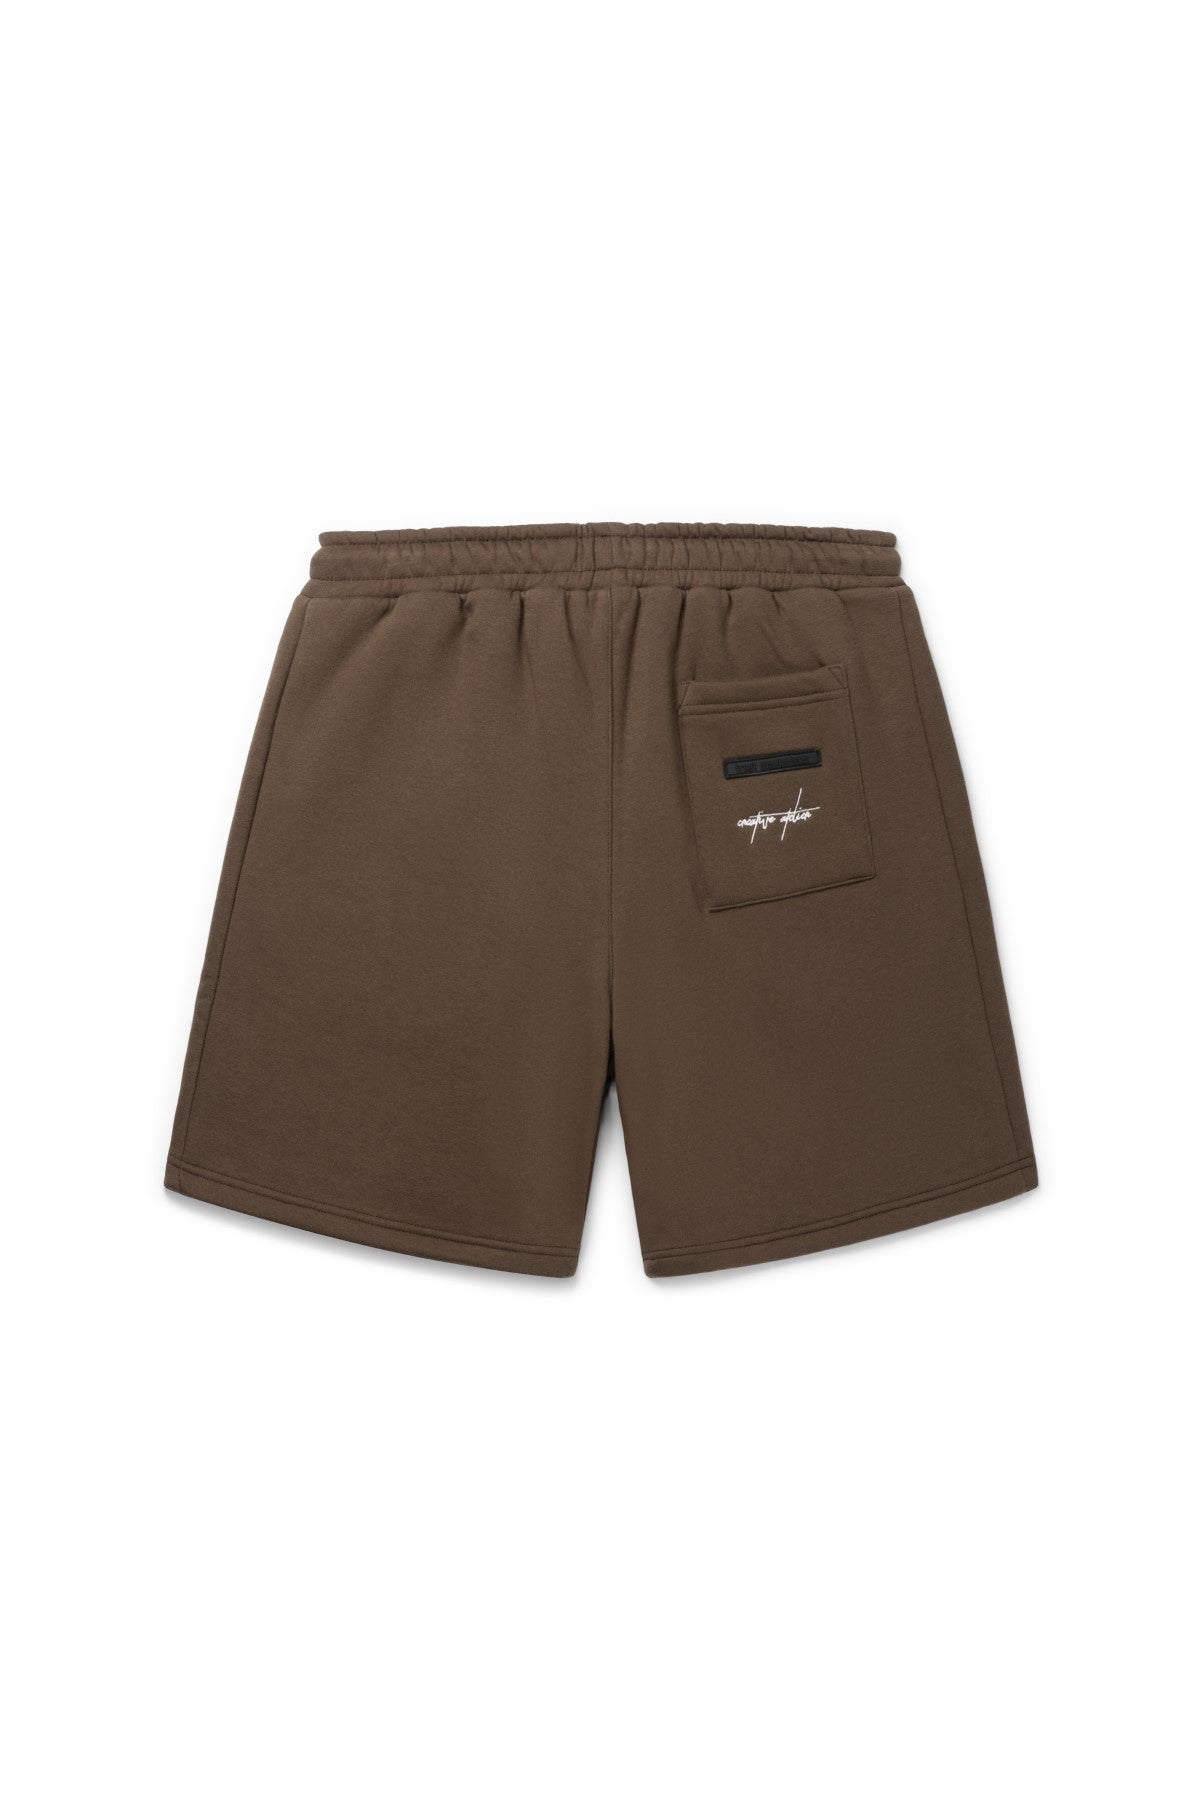 Seasonless Shorts - Chocolate Brown